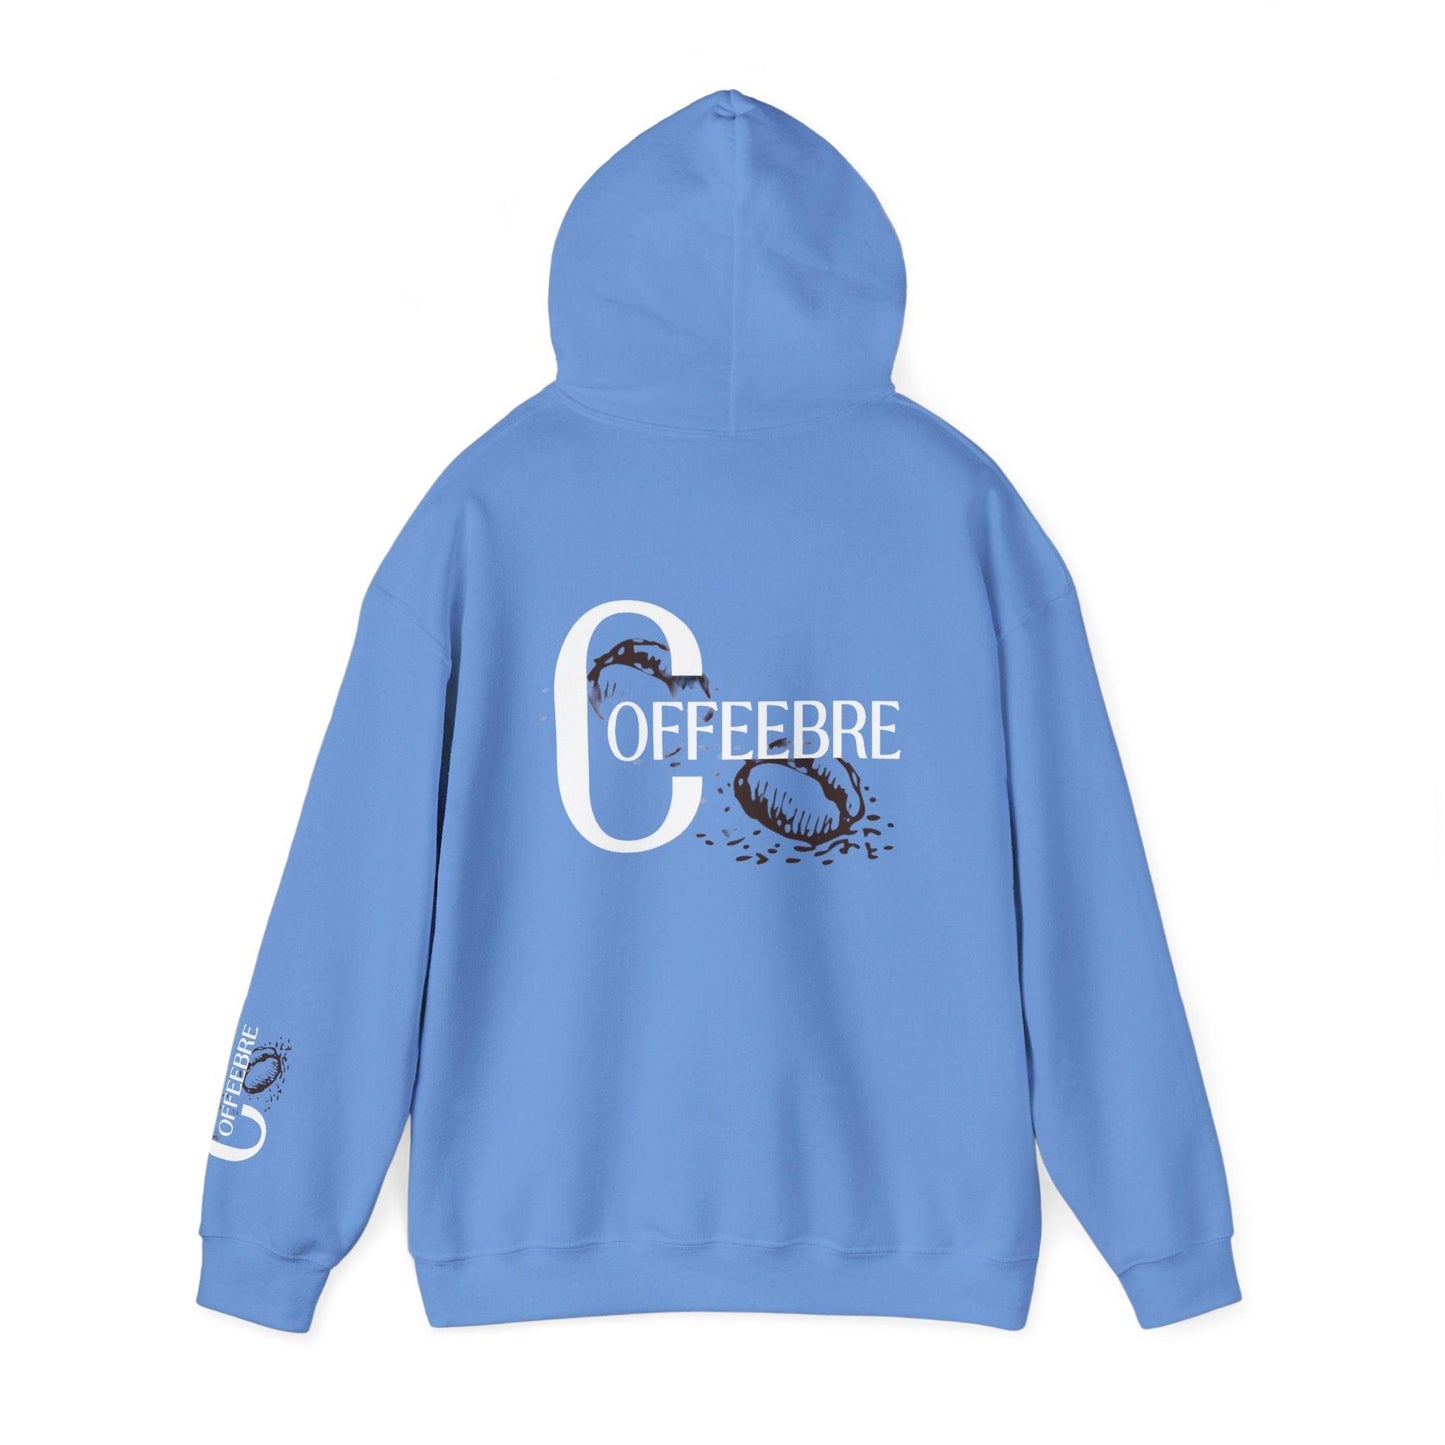 Coffeebre Athleisure Hooded Sweatshirt - COFFEEBRE